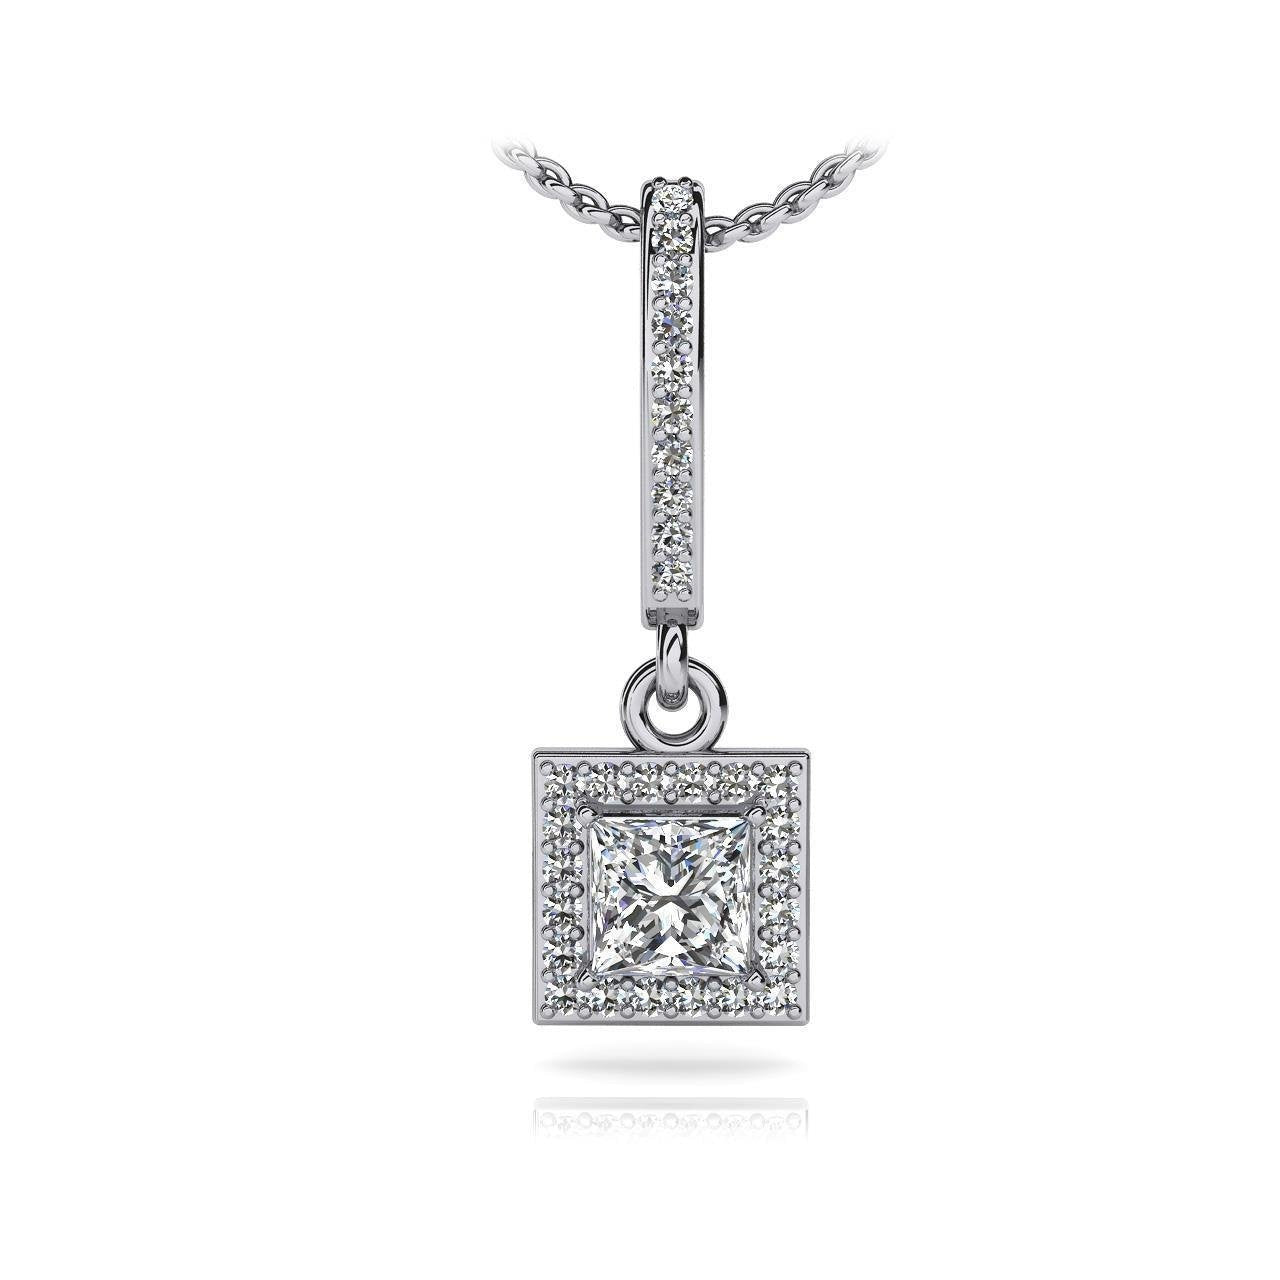 Round Cut Real Princess Diamond Pendant Necklace 3.3 Carat White Gold 14K